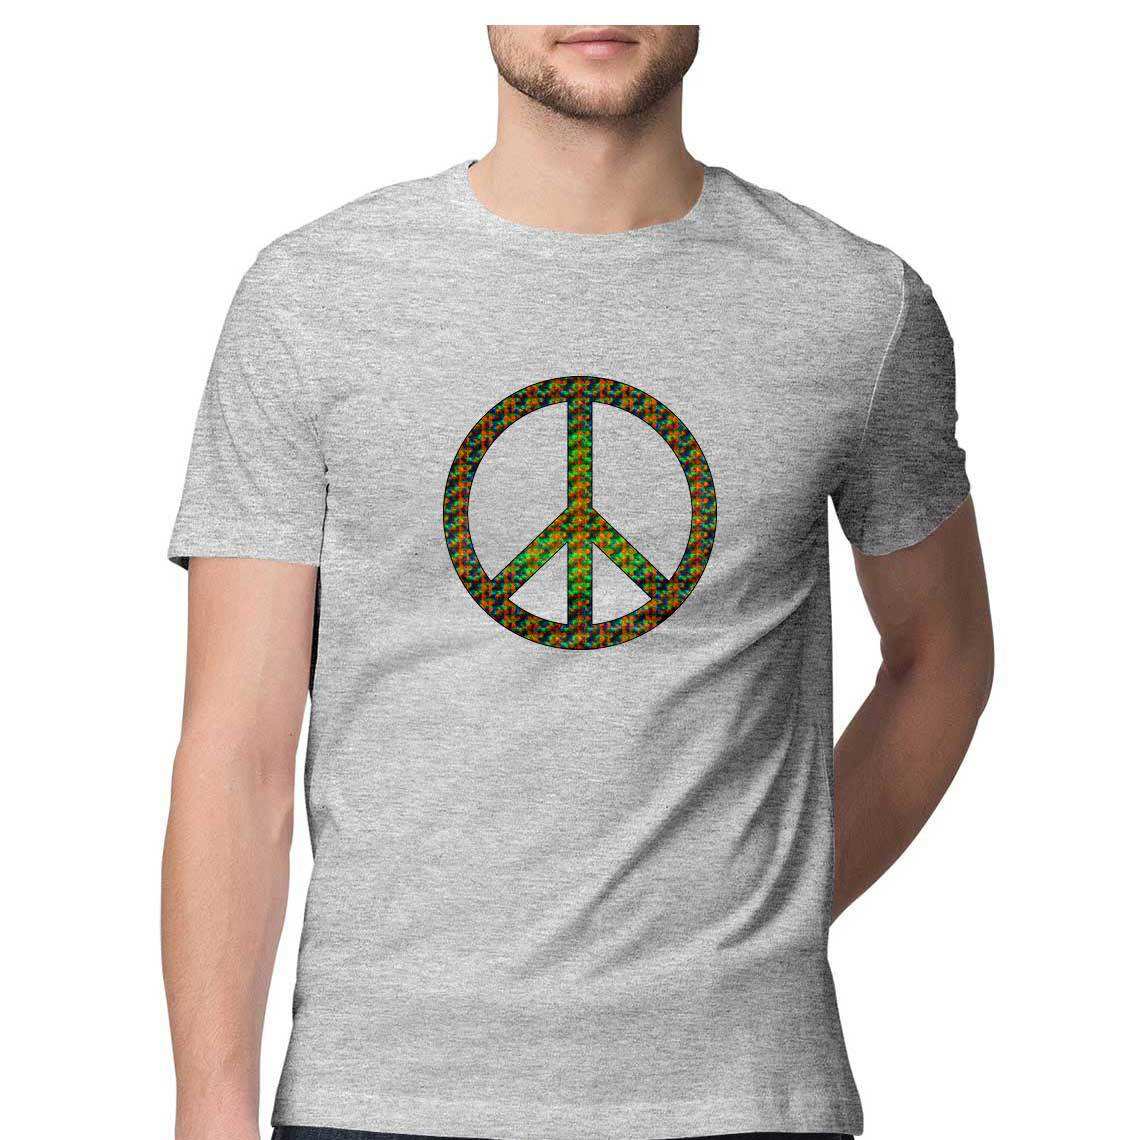 Color Me Peaceful Men's T-Shirt - CBD Store India